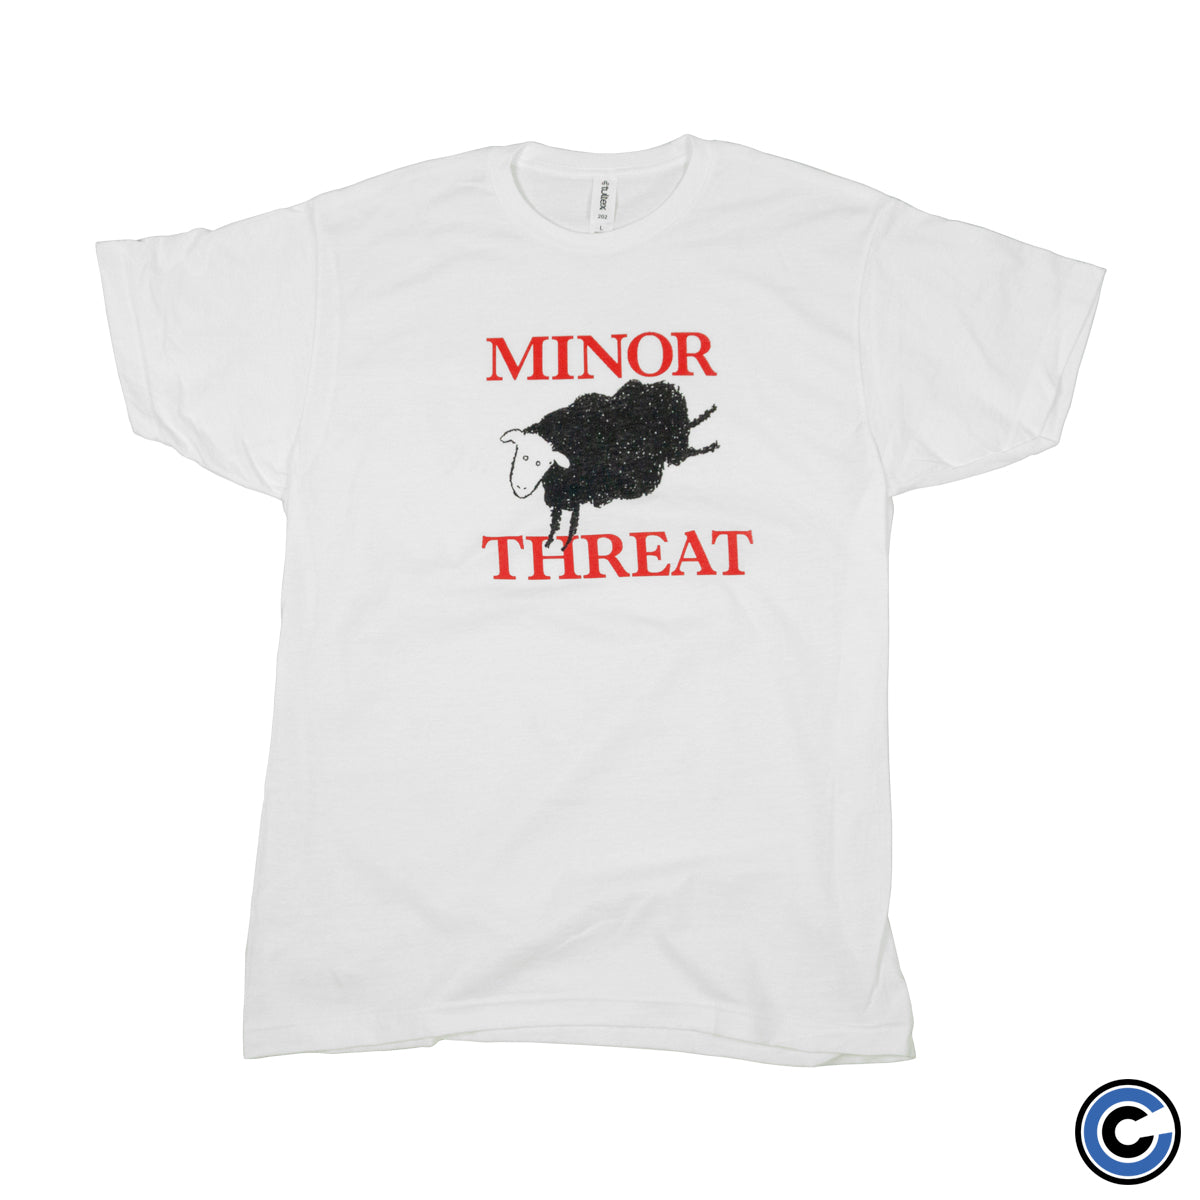 Minor Threat "Black Sheep" Shirt